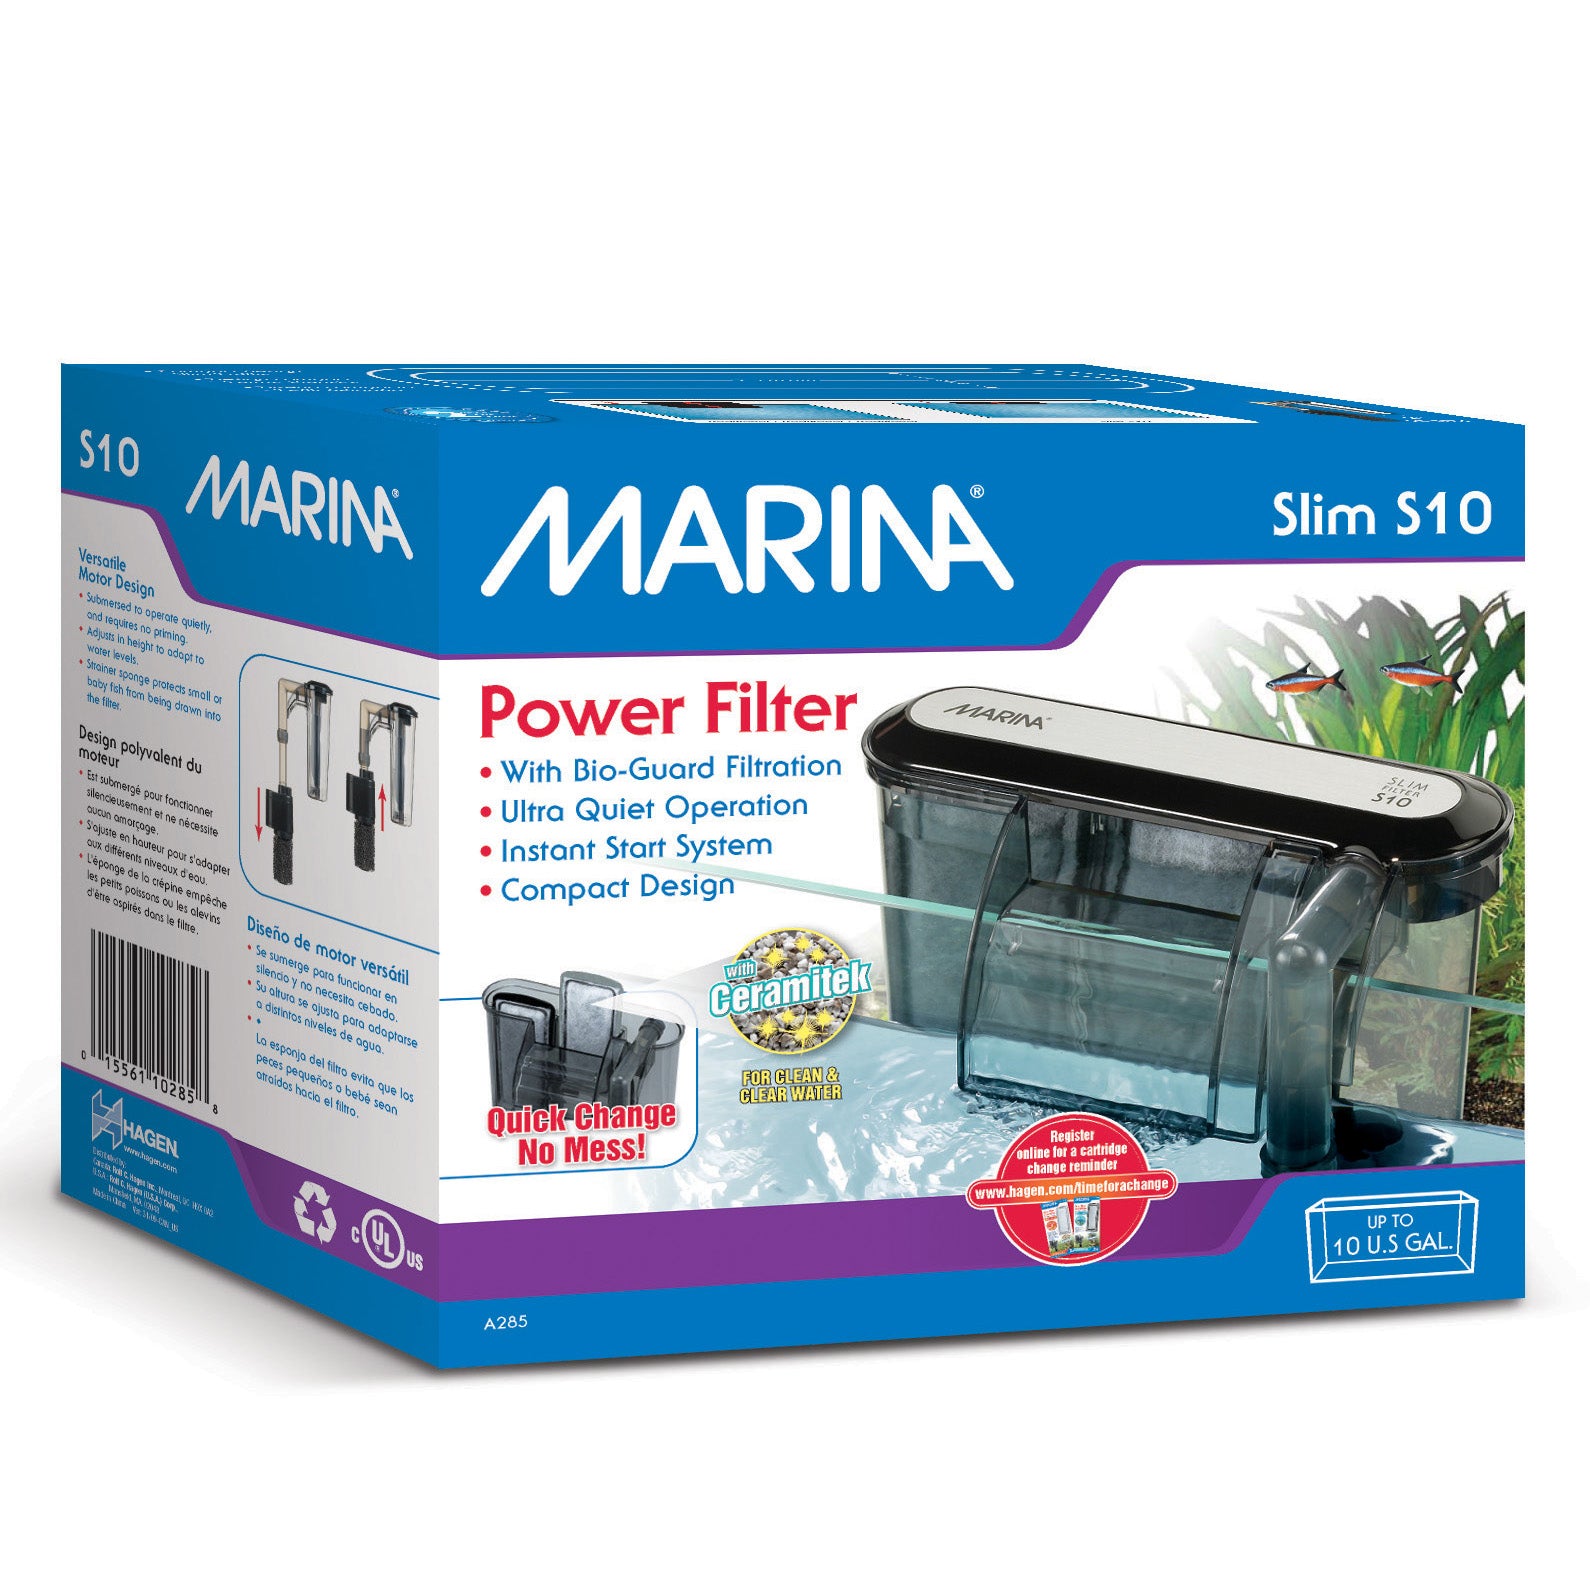 Marina Slim Filters